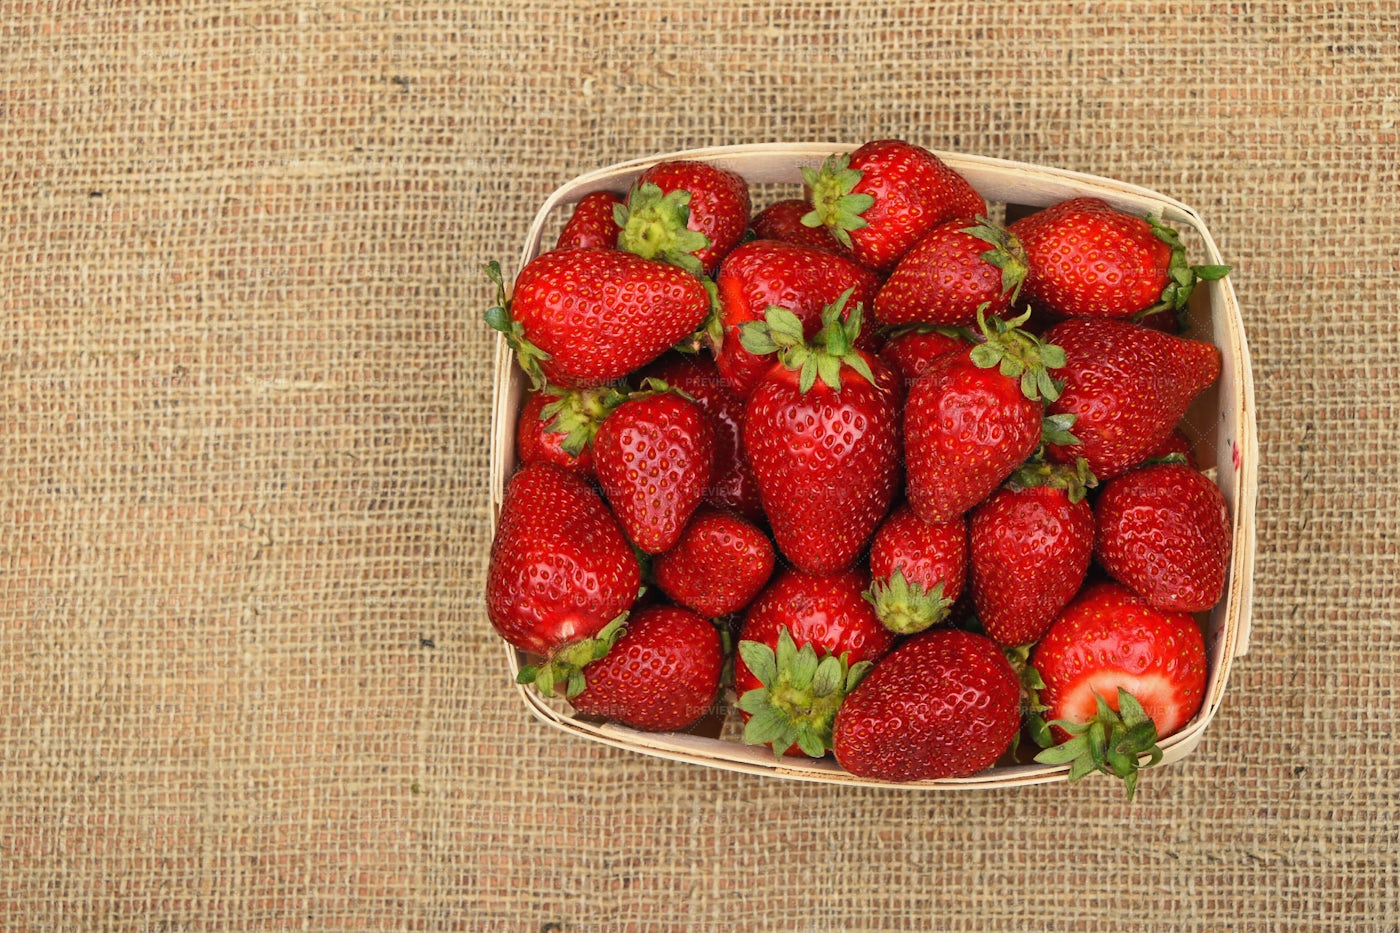 Carton Of Strawberries: Stock Photos